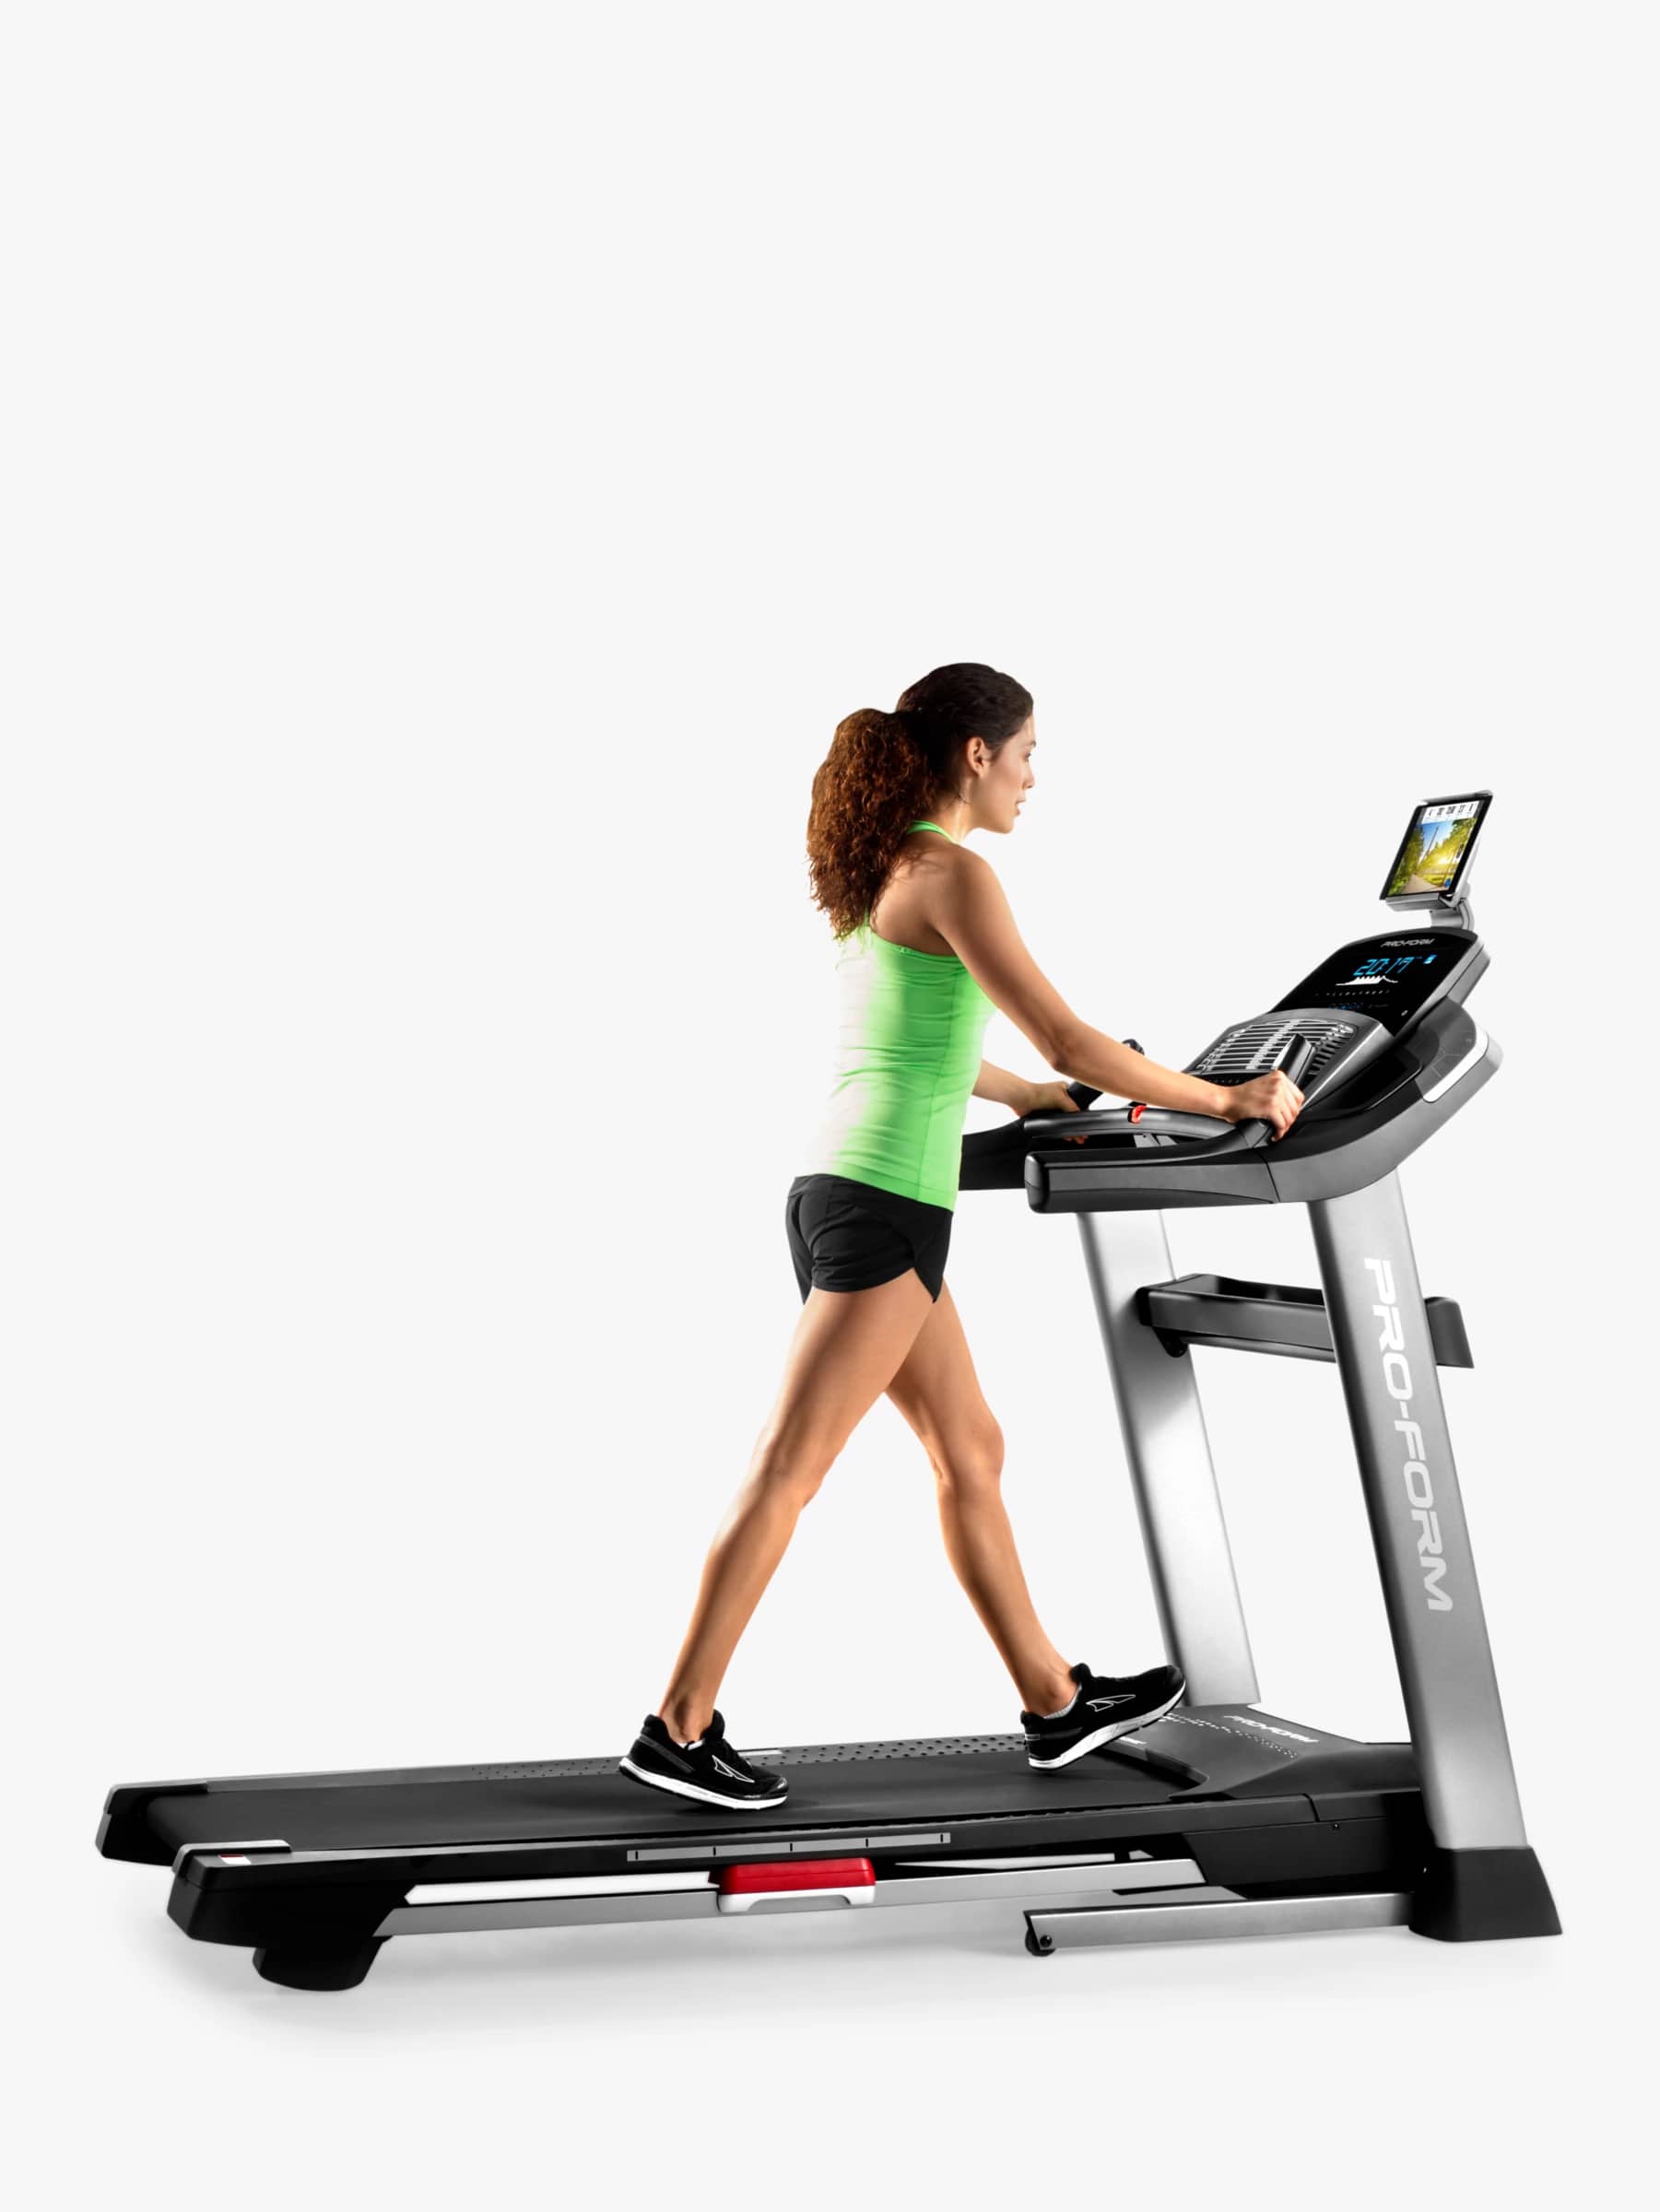 ProForm Pro 1000 Treadmill woman walking